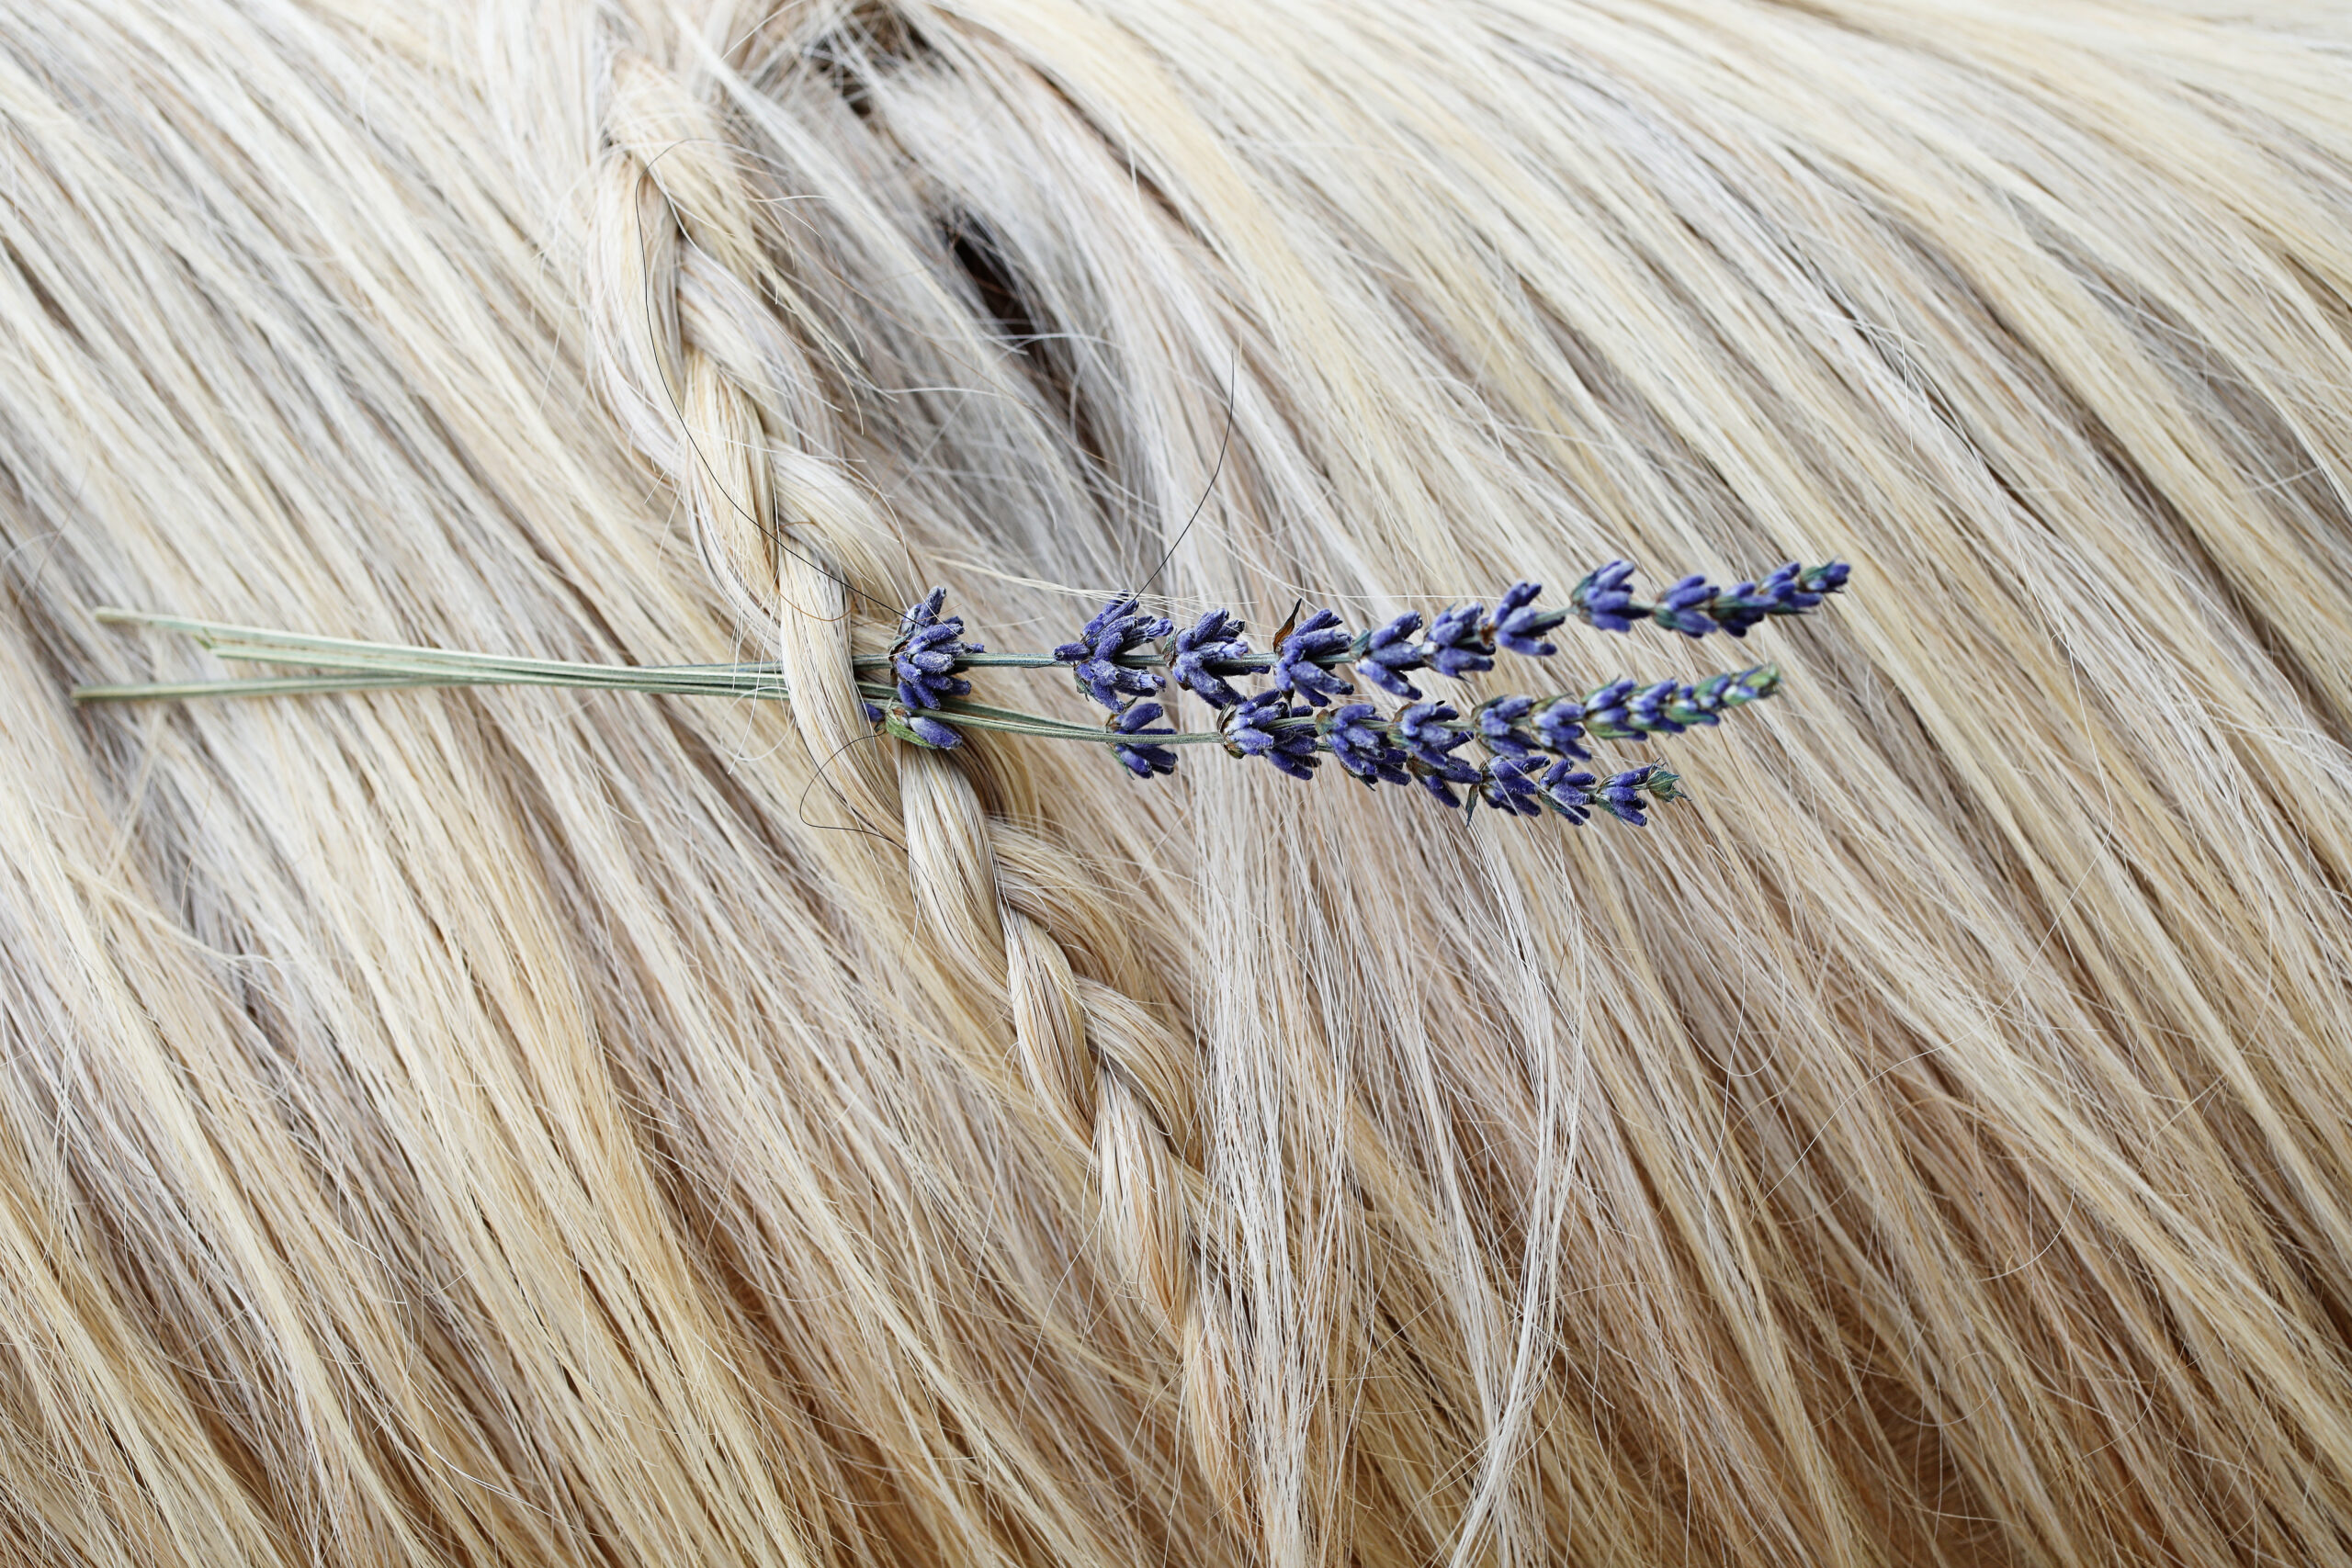 Horse hair braided with lavender